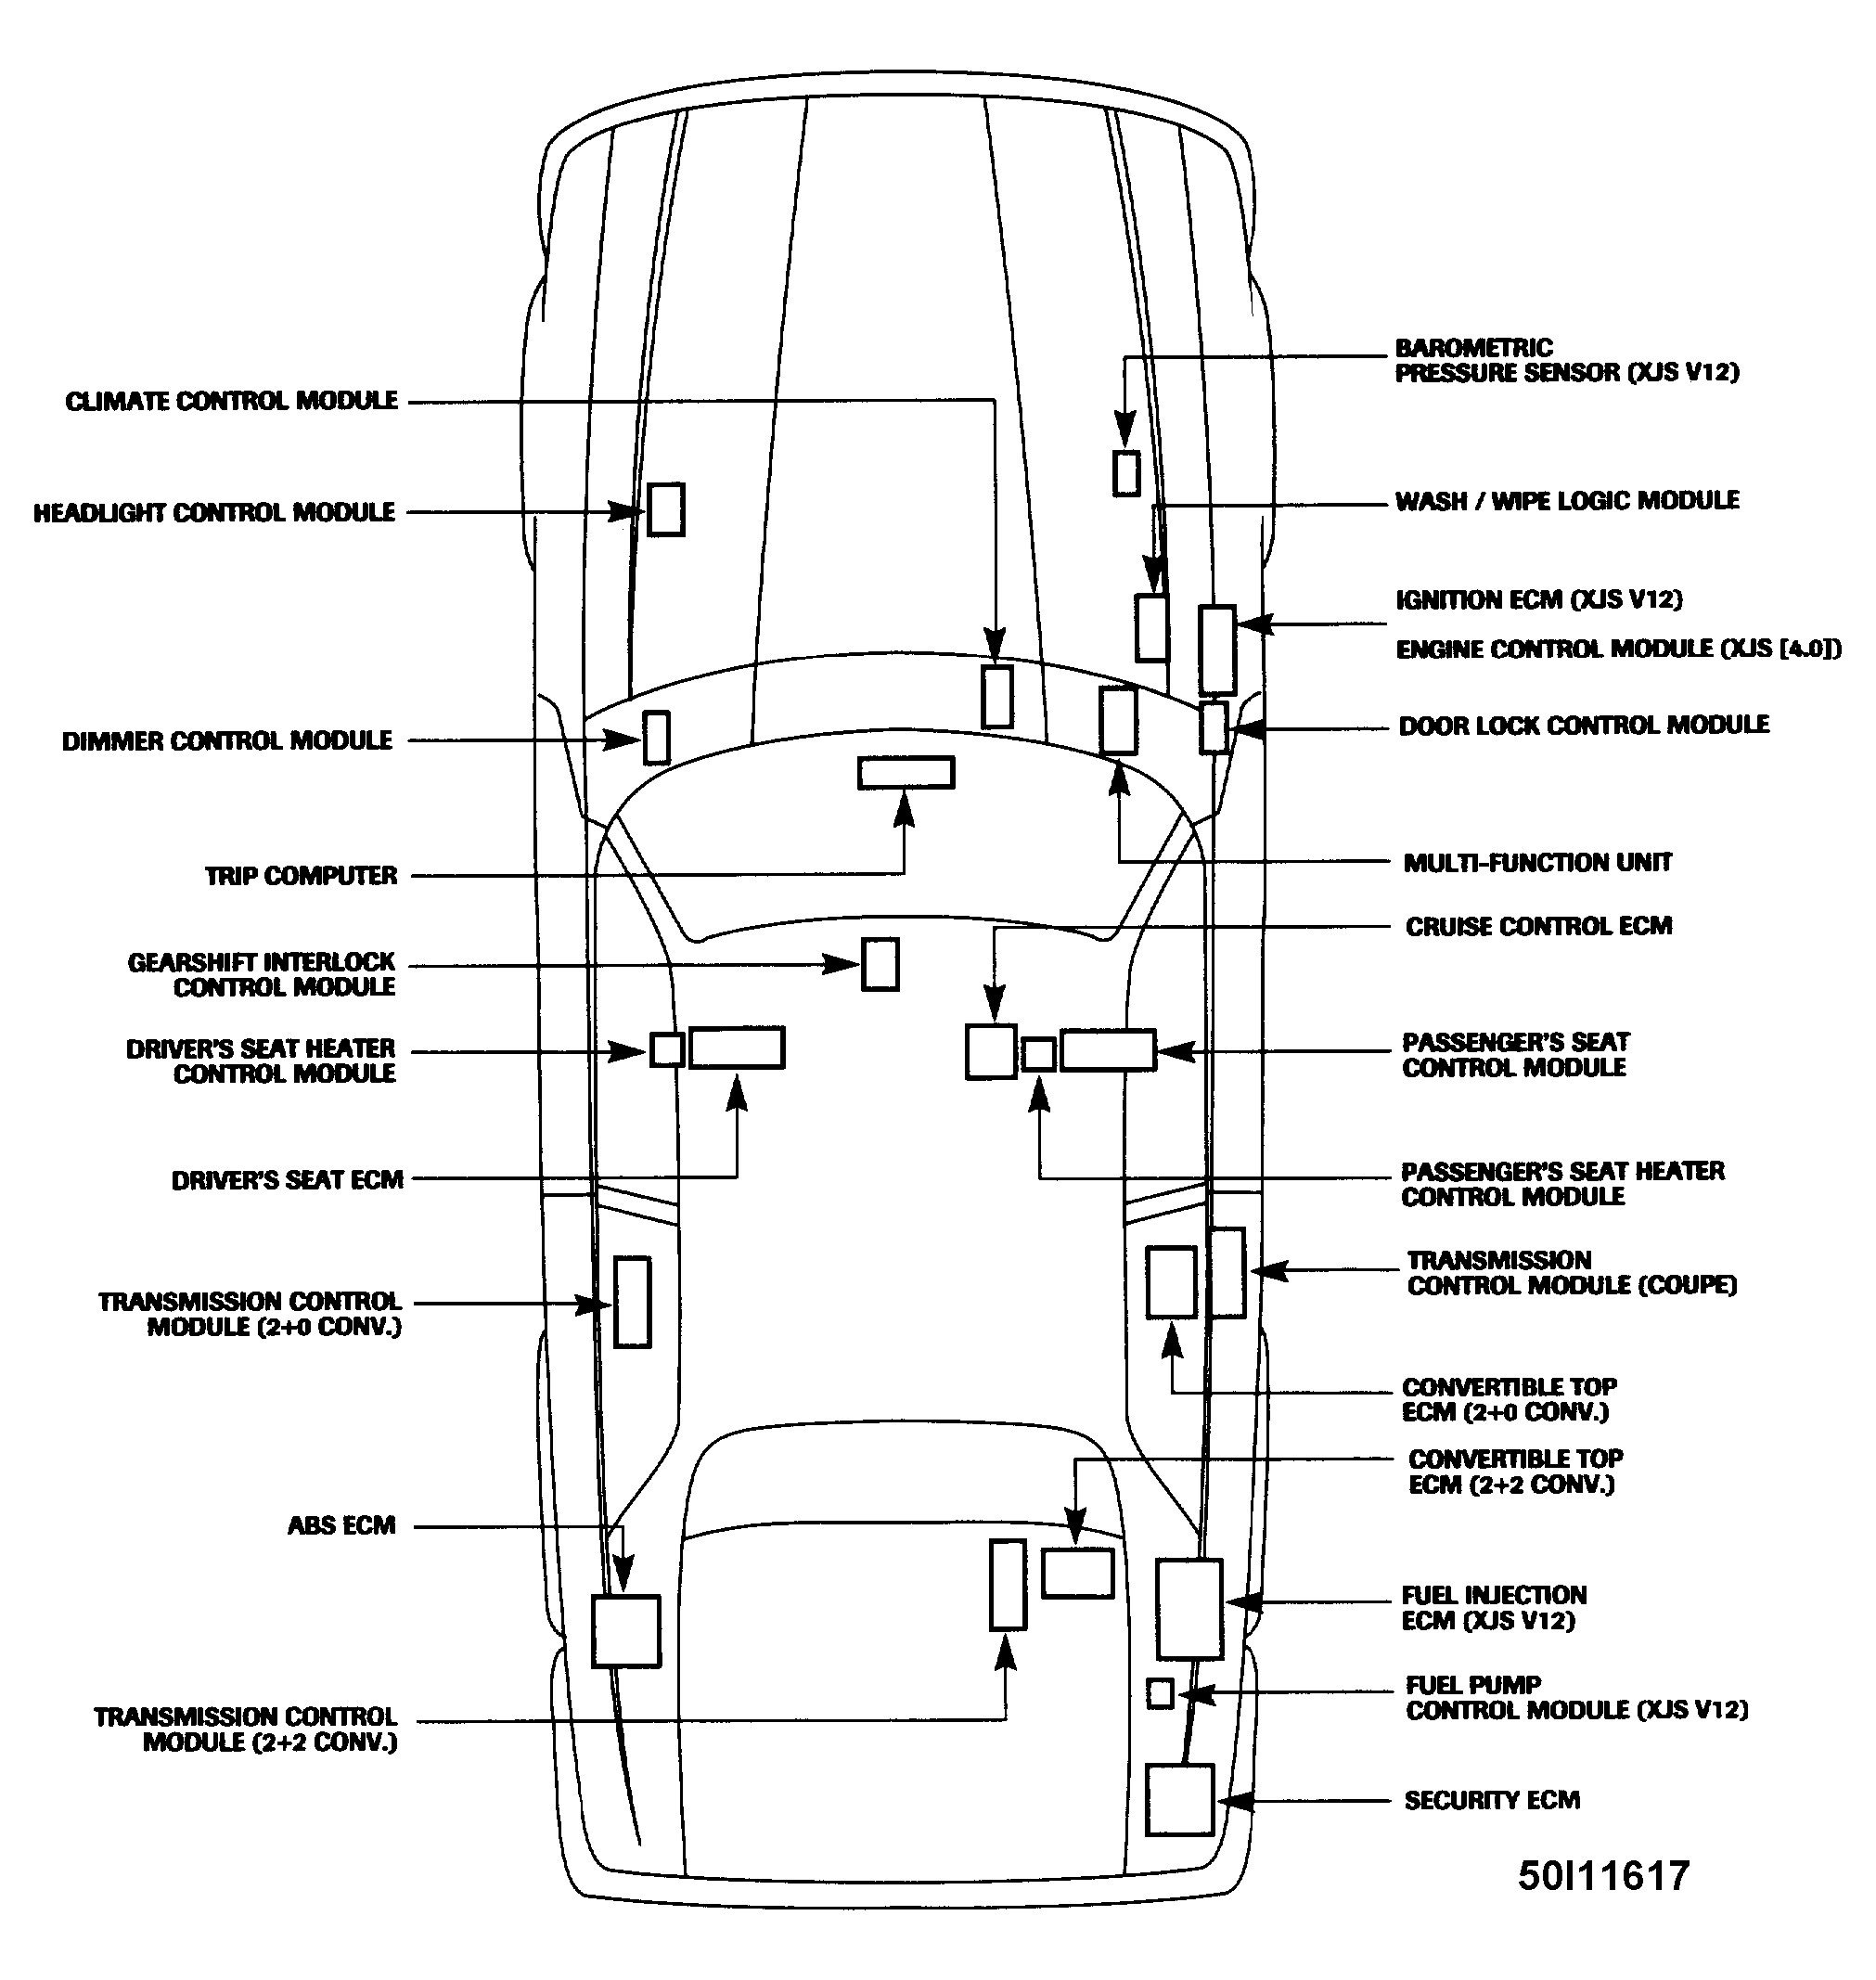 Jaguar XJS 1995 - Component Locations -  Vehicle Control Module Locations